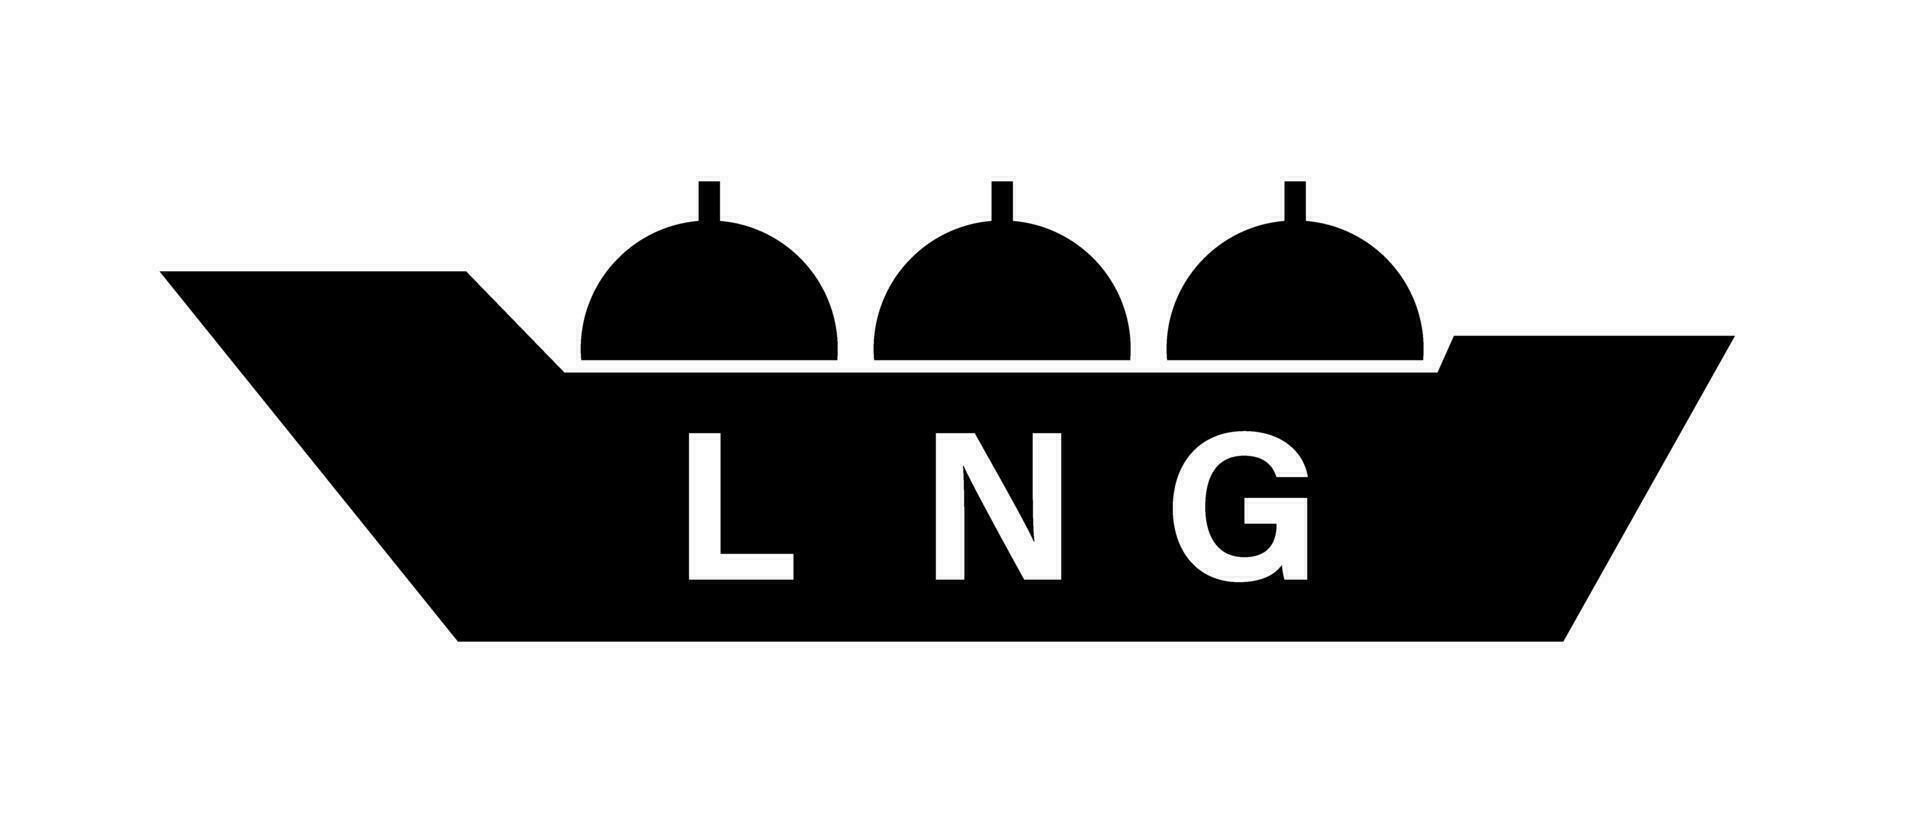 LNG tanker silhouette icon. lng ship. Marine transportation. Vector. vector